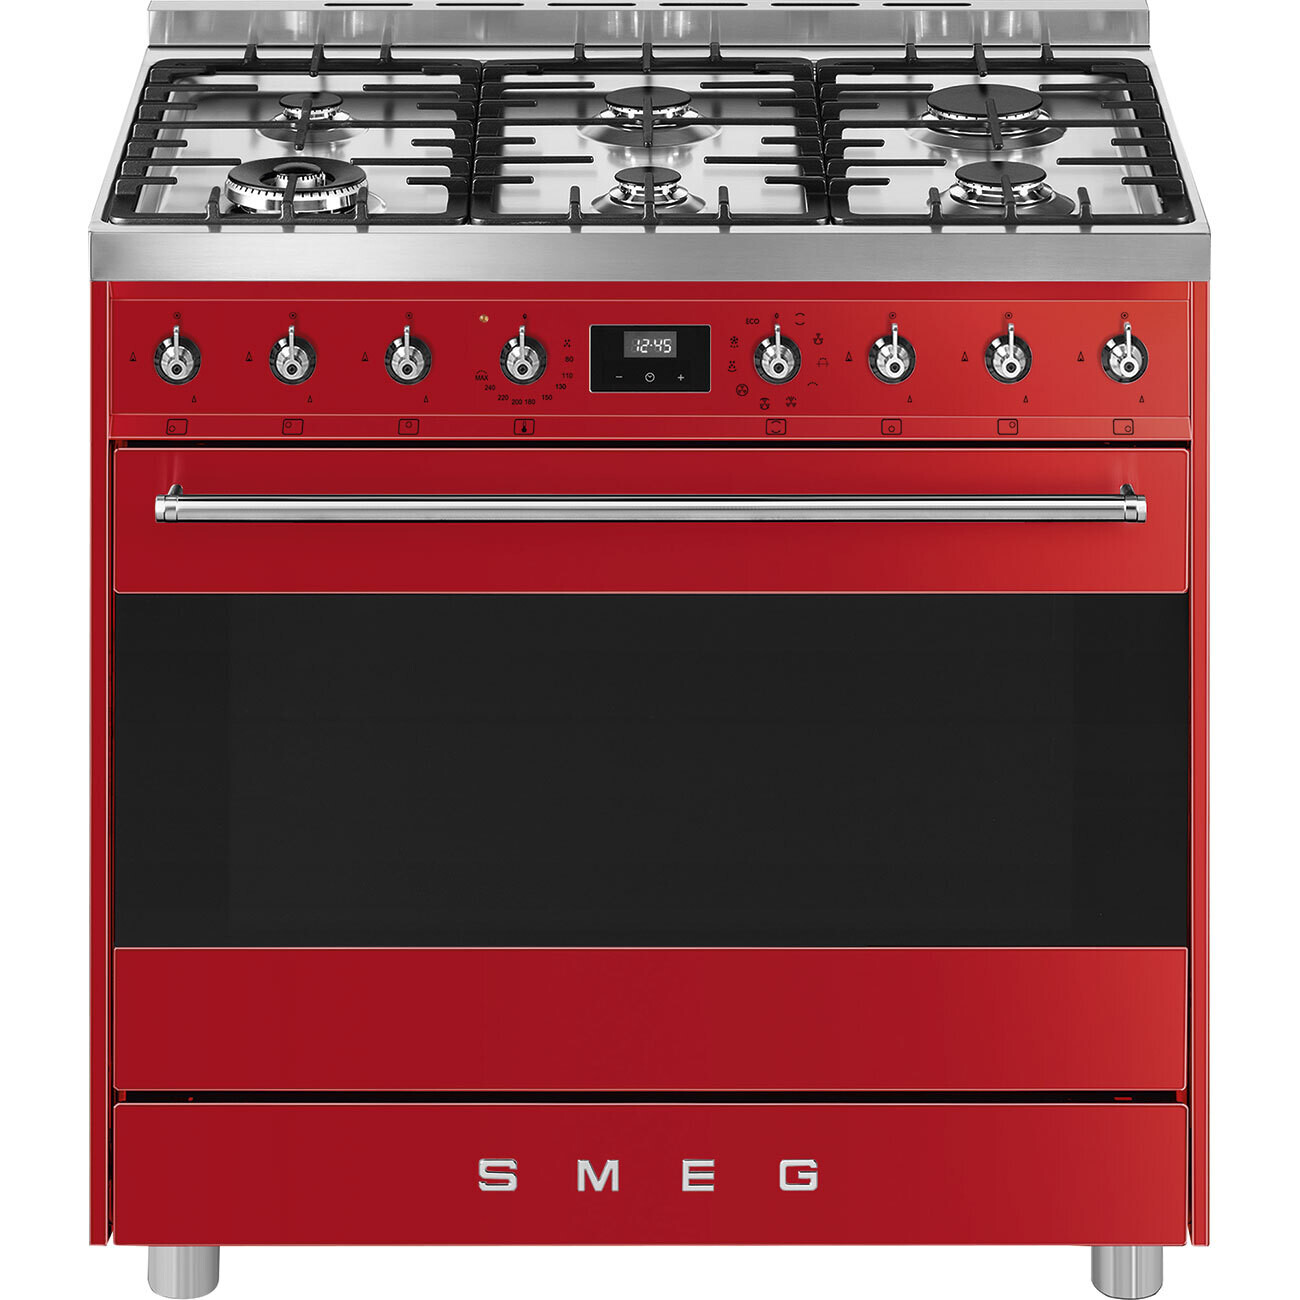 SMEG C9MARSSA9 - 90cm 6 Burner Red Gas/Electric Cooker